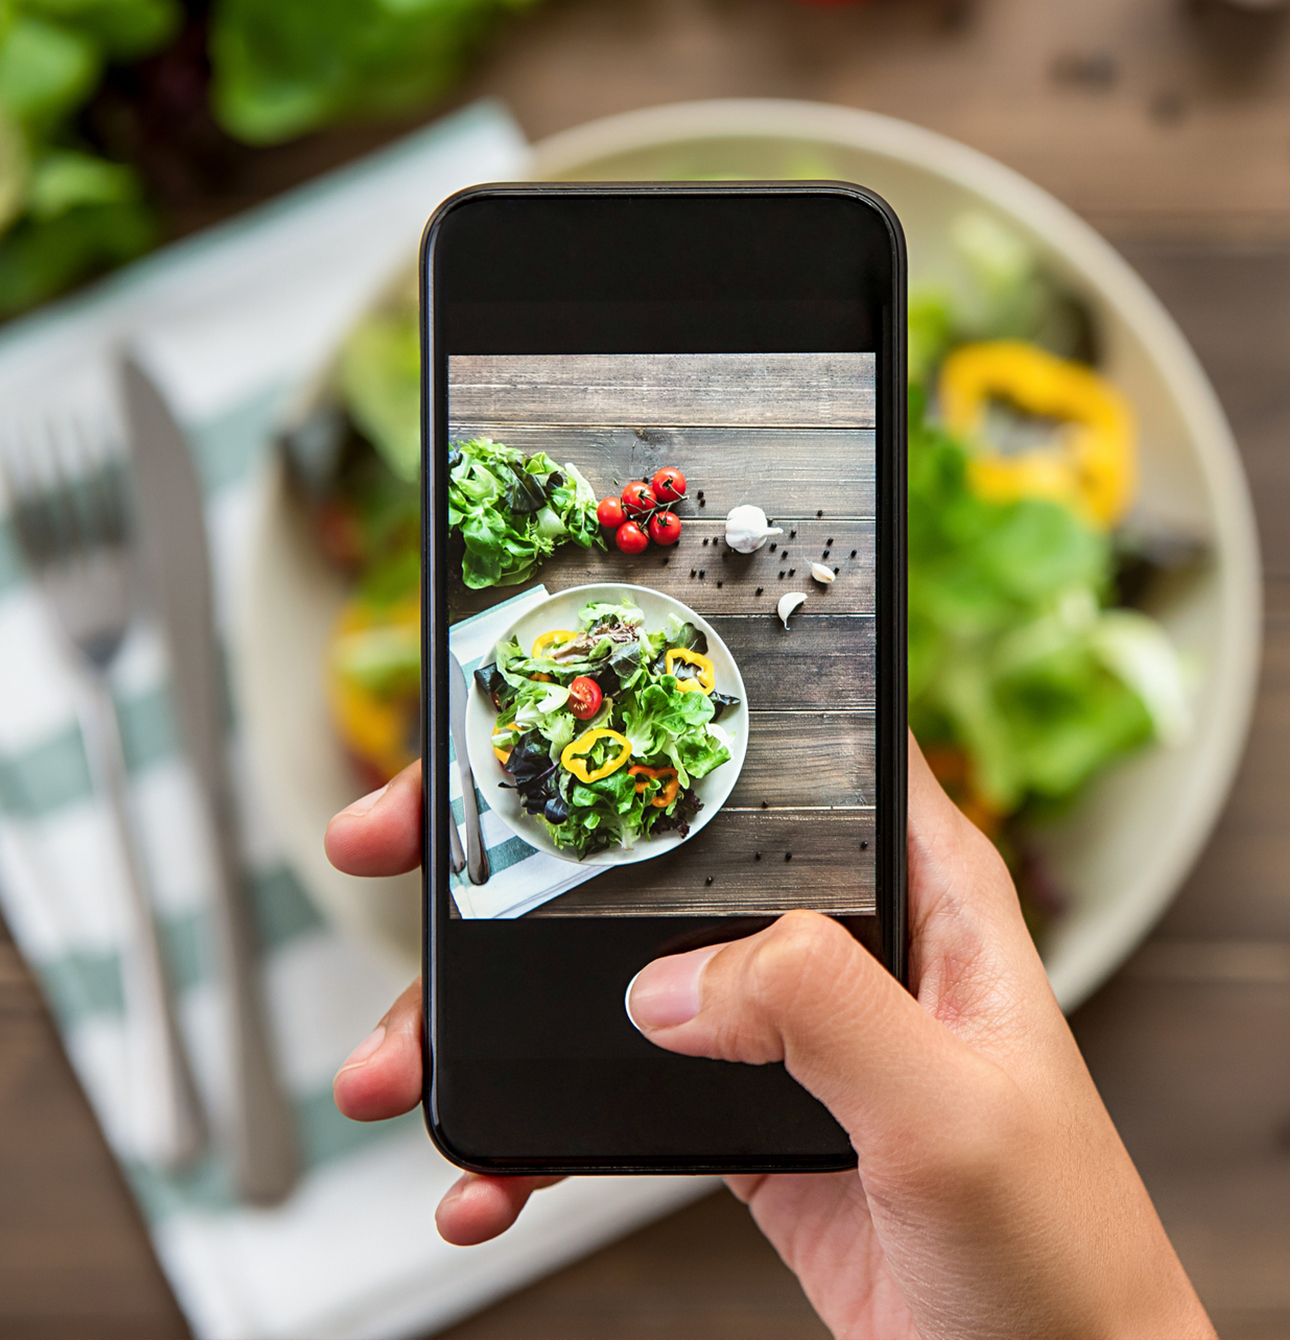 Tendances alimentaires médias sociaux | Food trends on social media